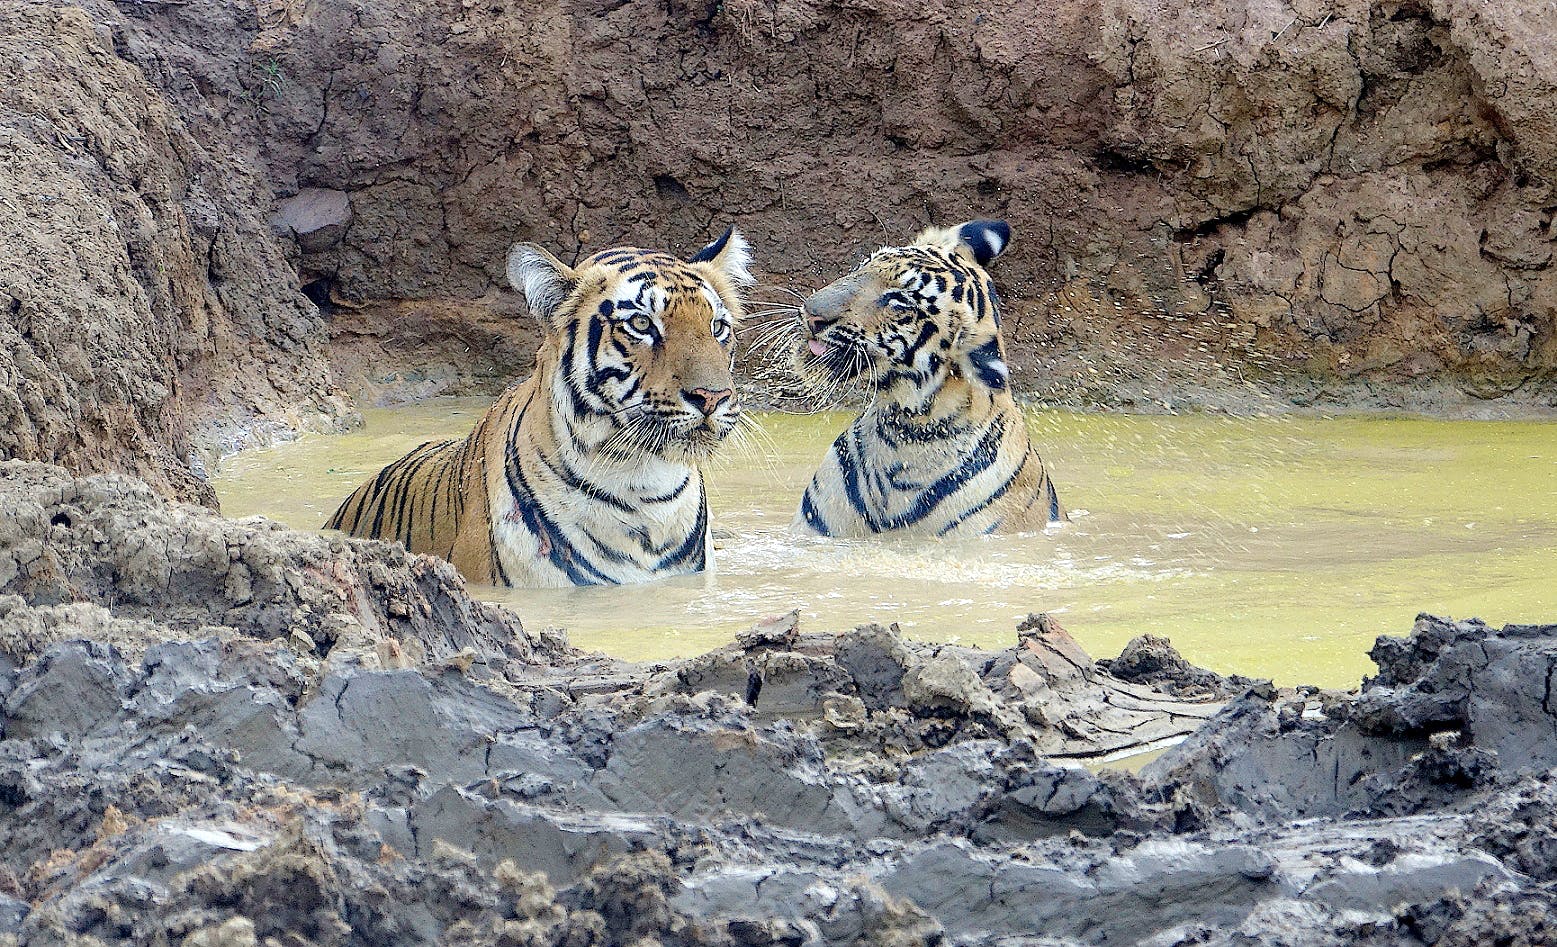 Tiger,Bengal tiger,Wildlife,Felidae,Siberian tiger,Terrestrial animal,Big cats,Water,Carnivore,Zoo